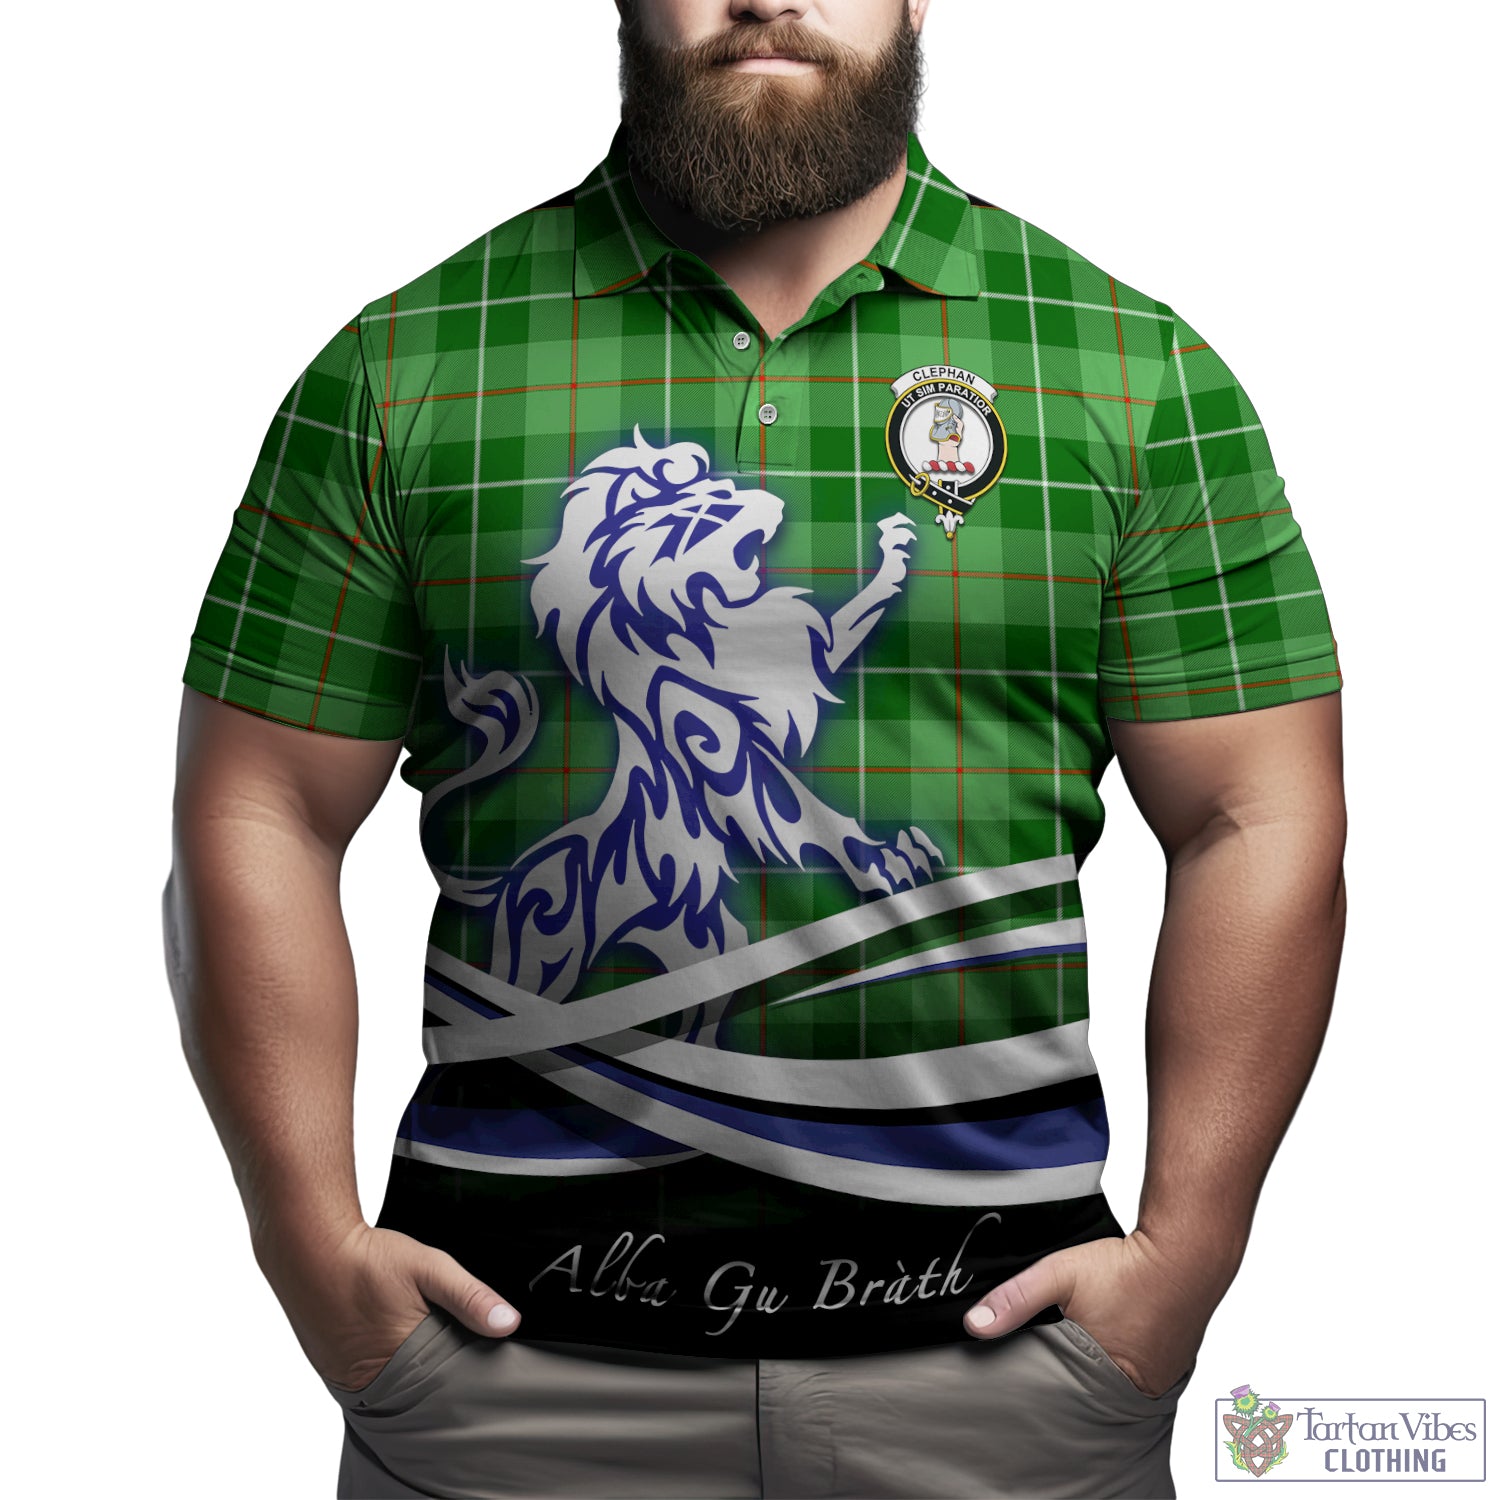 clephan-tartan-polo-shirt-with-alba-gu-brath-regal-lion-emblem